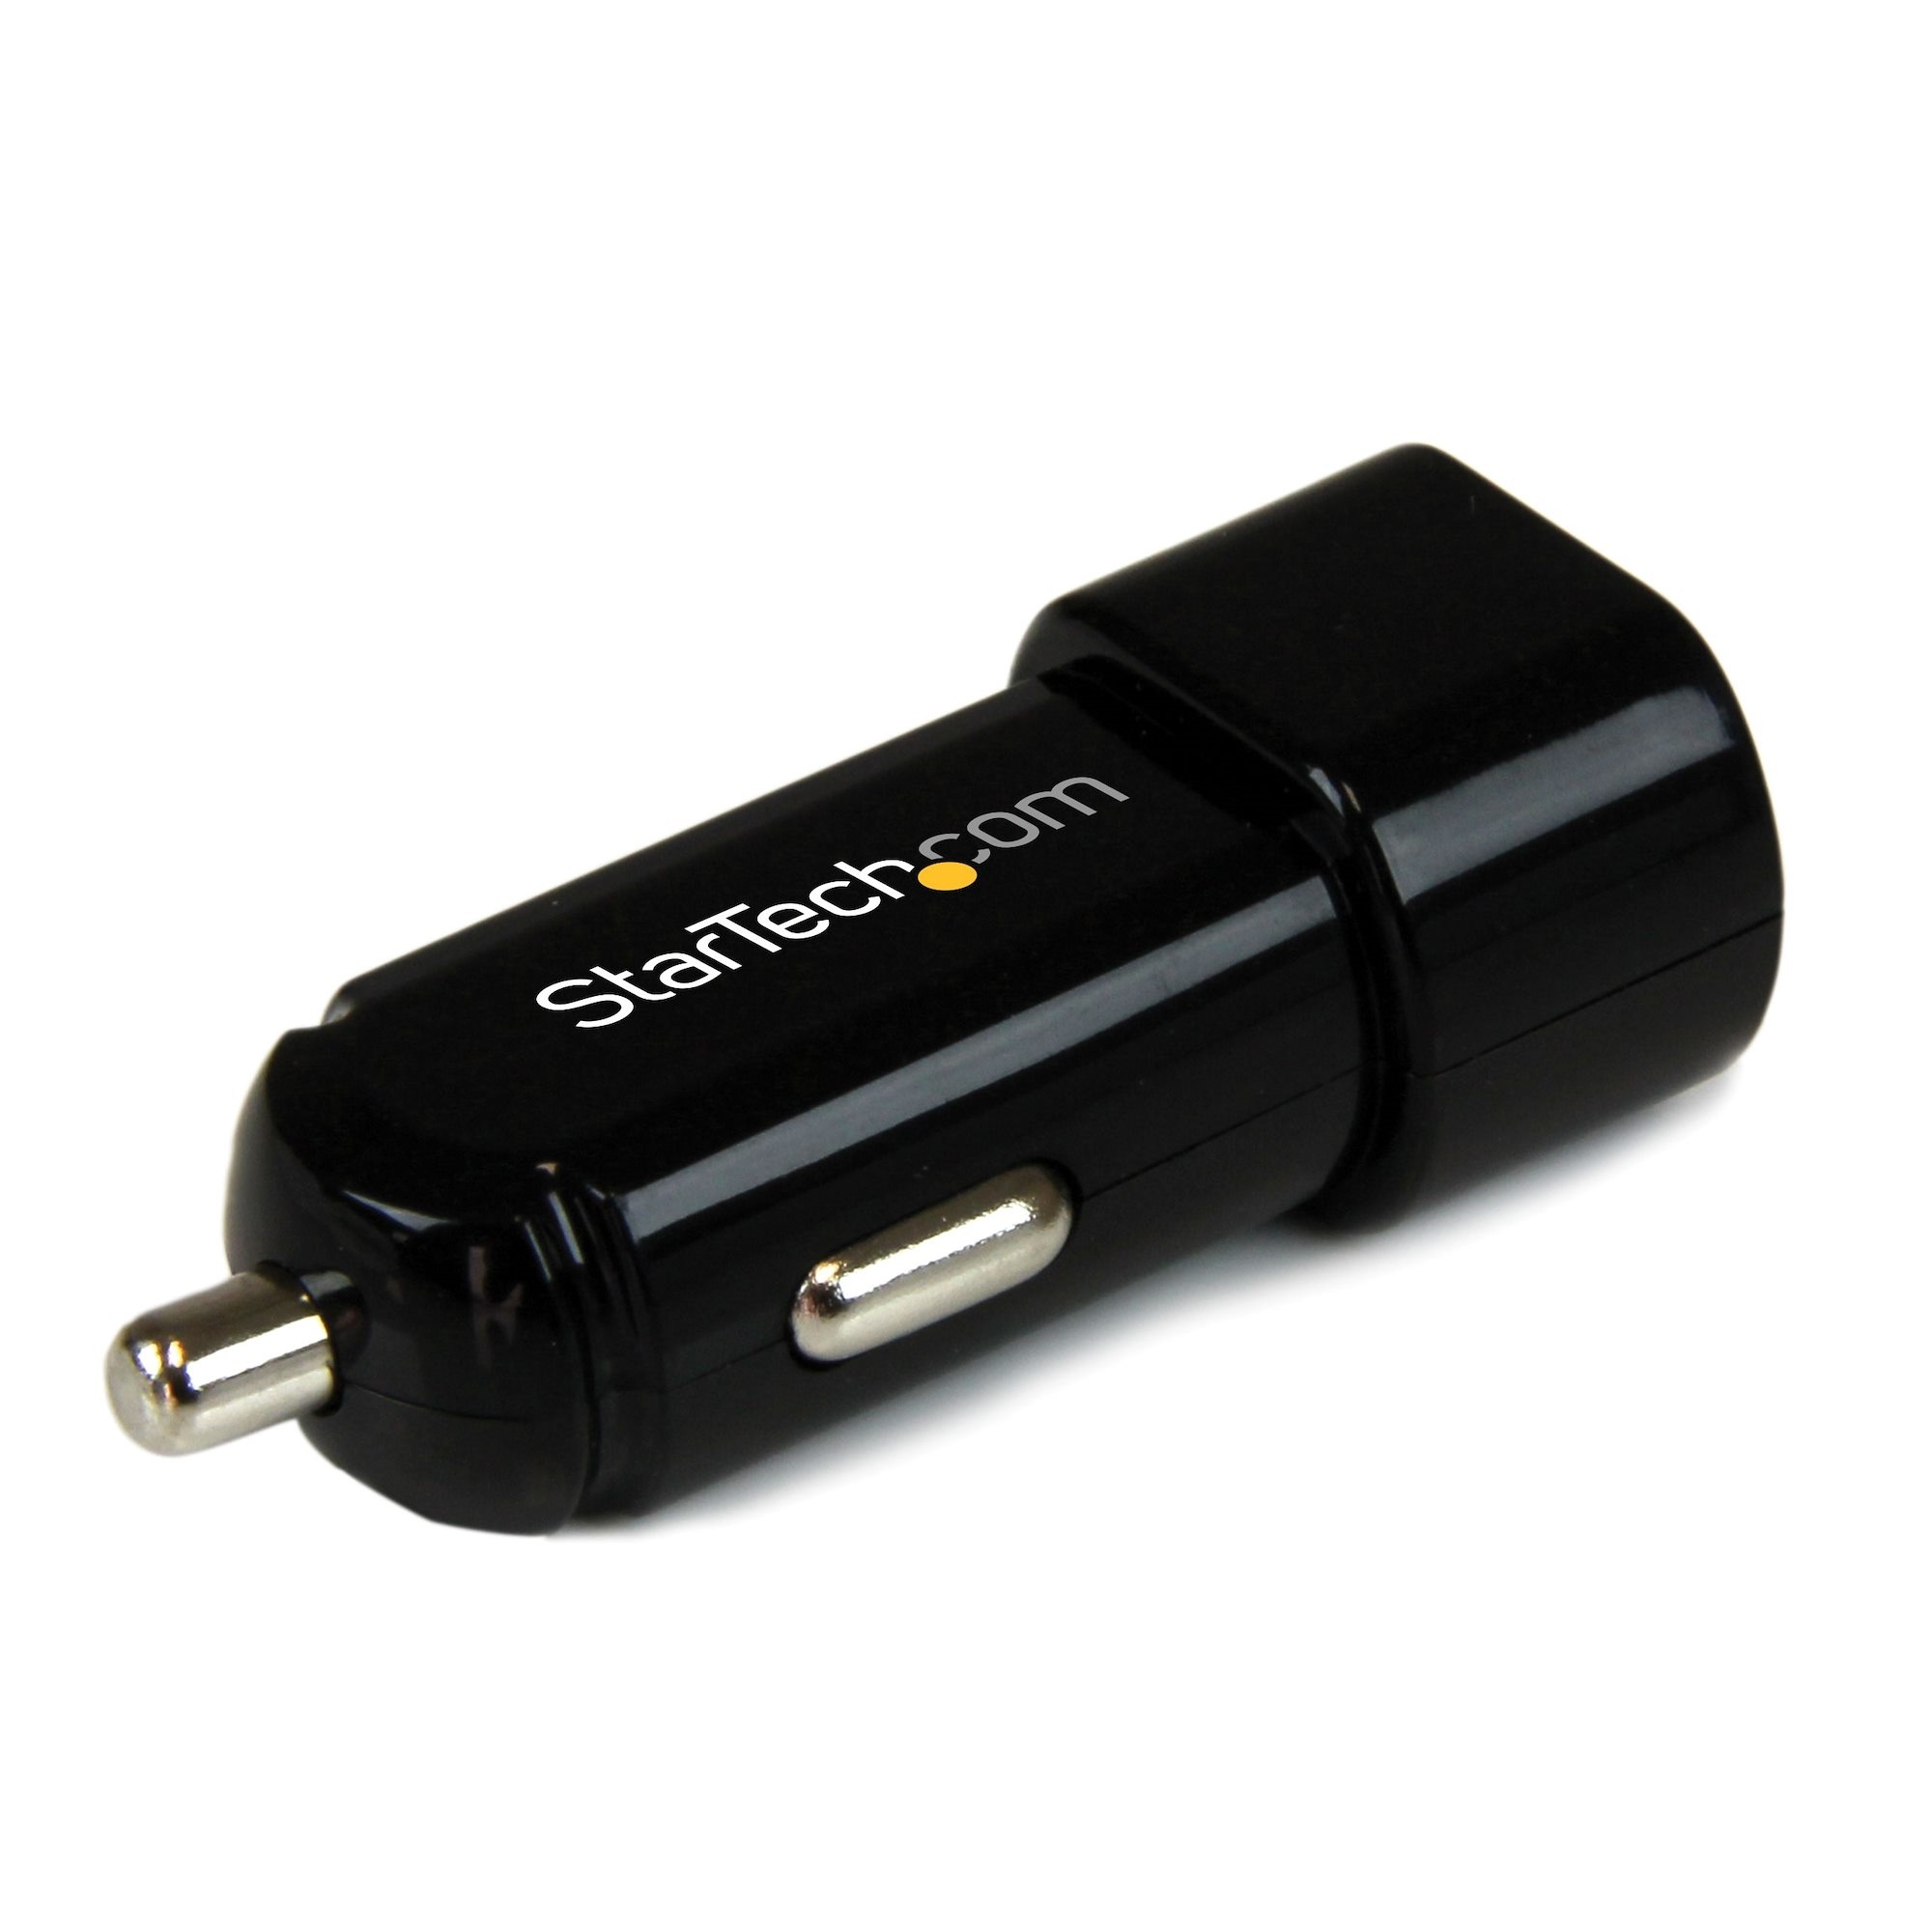 StarTech Dual Port USB Car Charger 17W / 3.4A